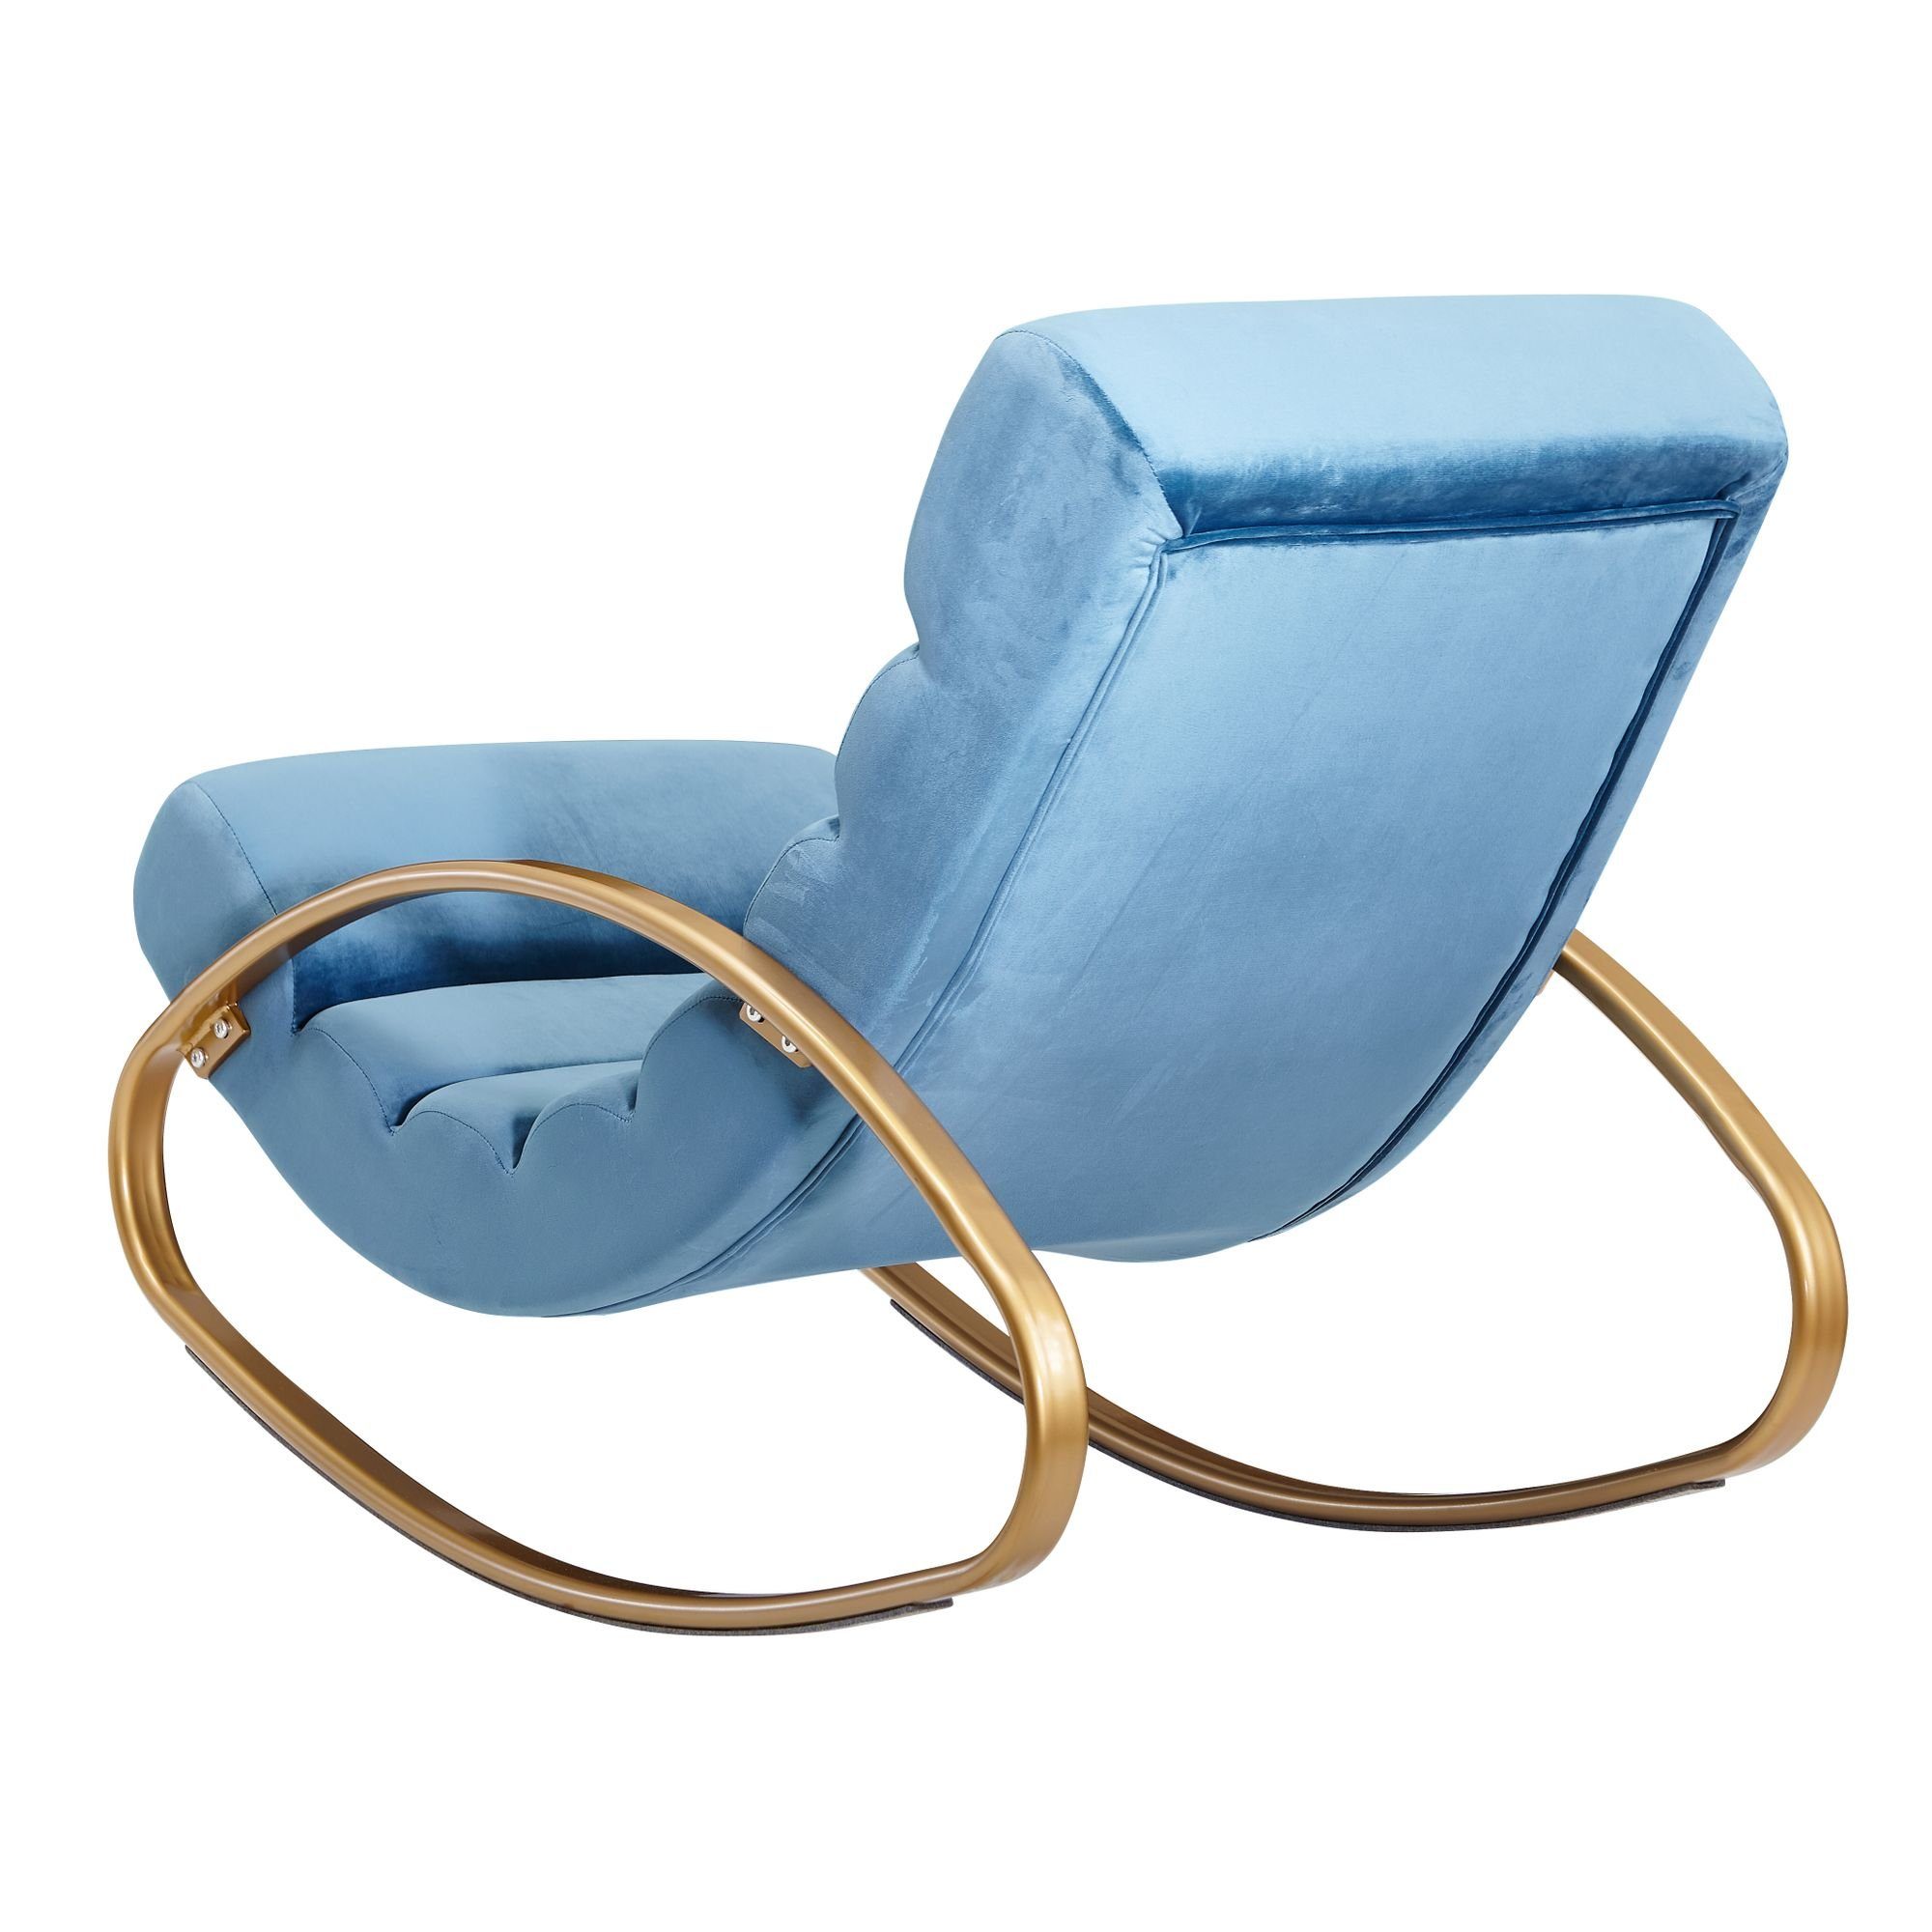 KADIMA DESIGN Gold | Blau | Blau Bequemer MUR mit Wippfunktion Schaukelstuhl Relaxsessel - Schaukelsessel